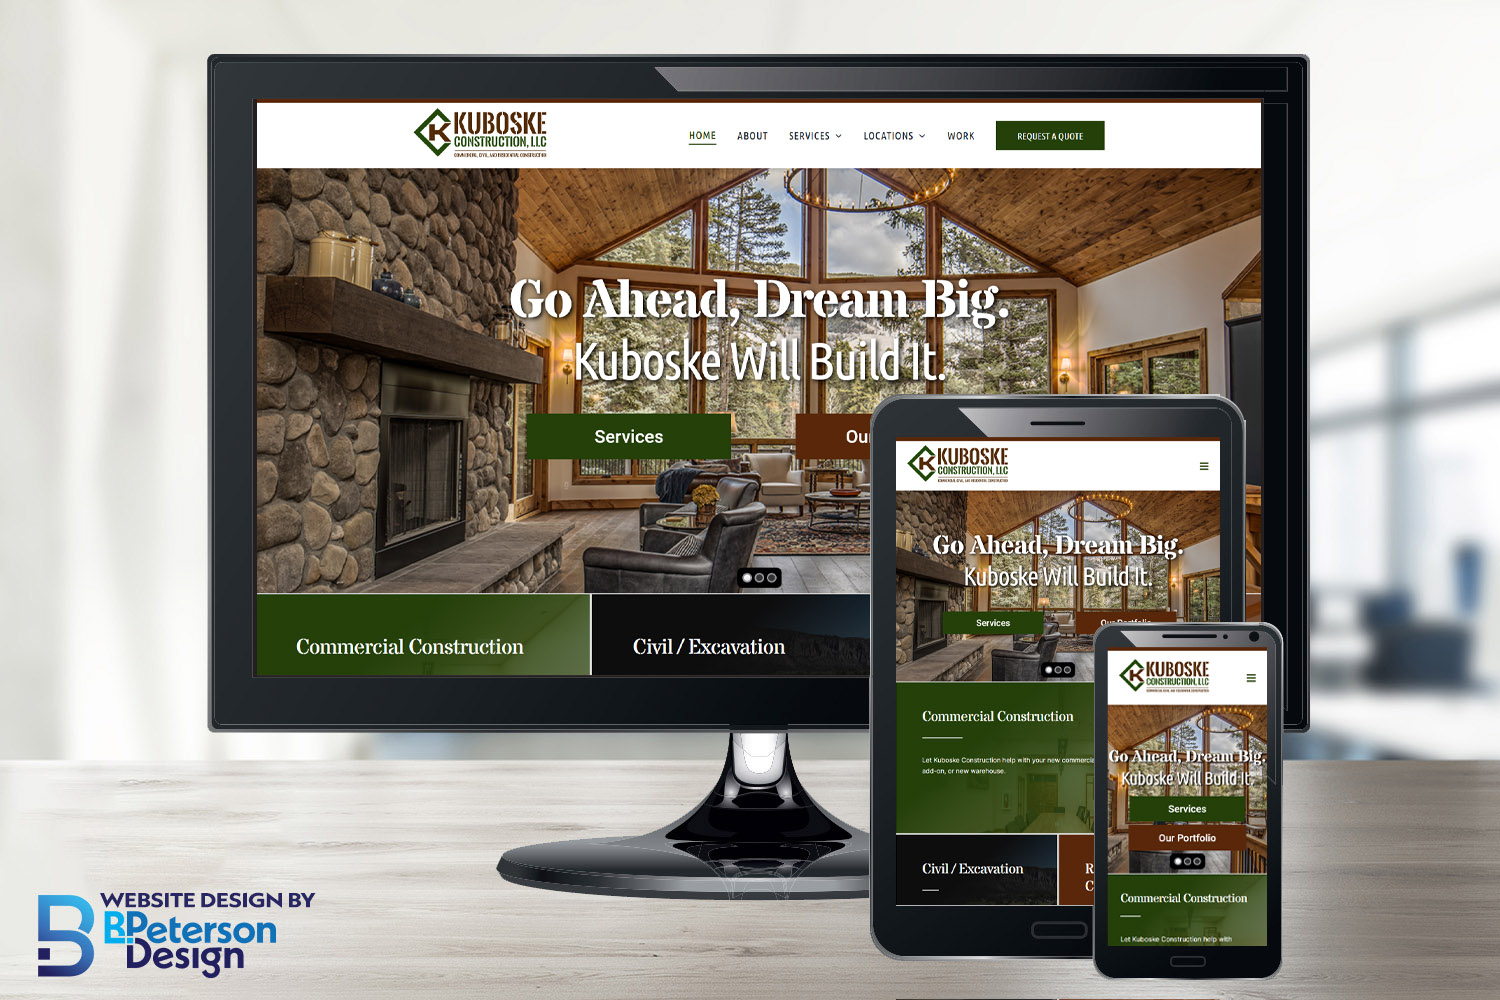 Kuboske's Small Business Website in Montrose, CO